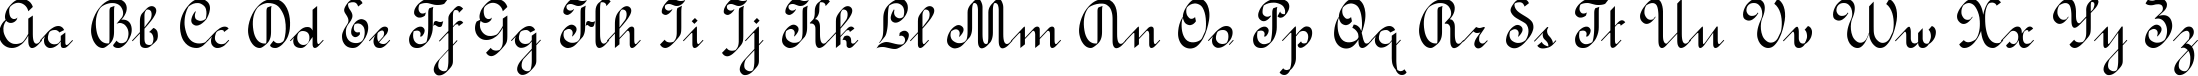 Пример написания английского алфавита шрифтом Rondo Calligraphic